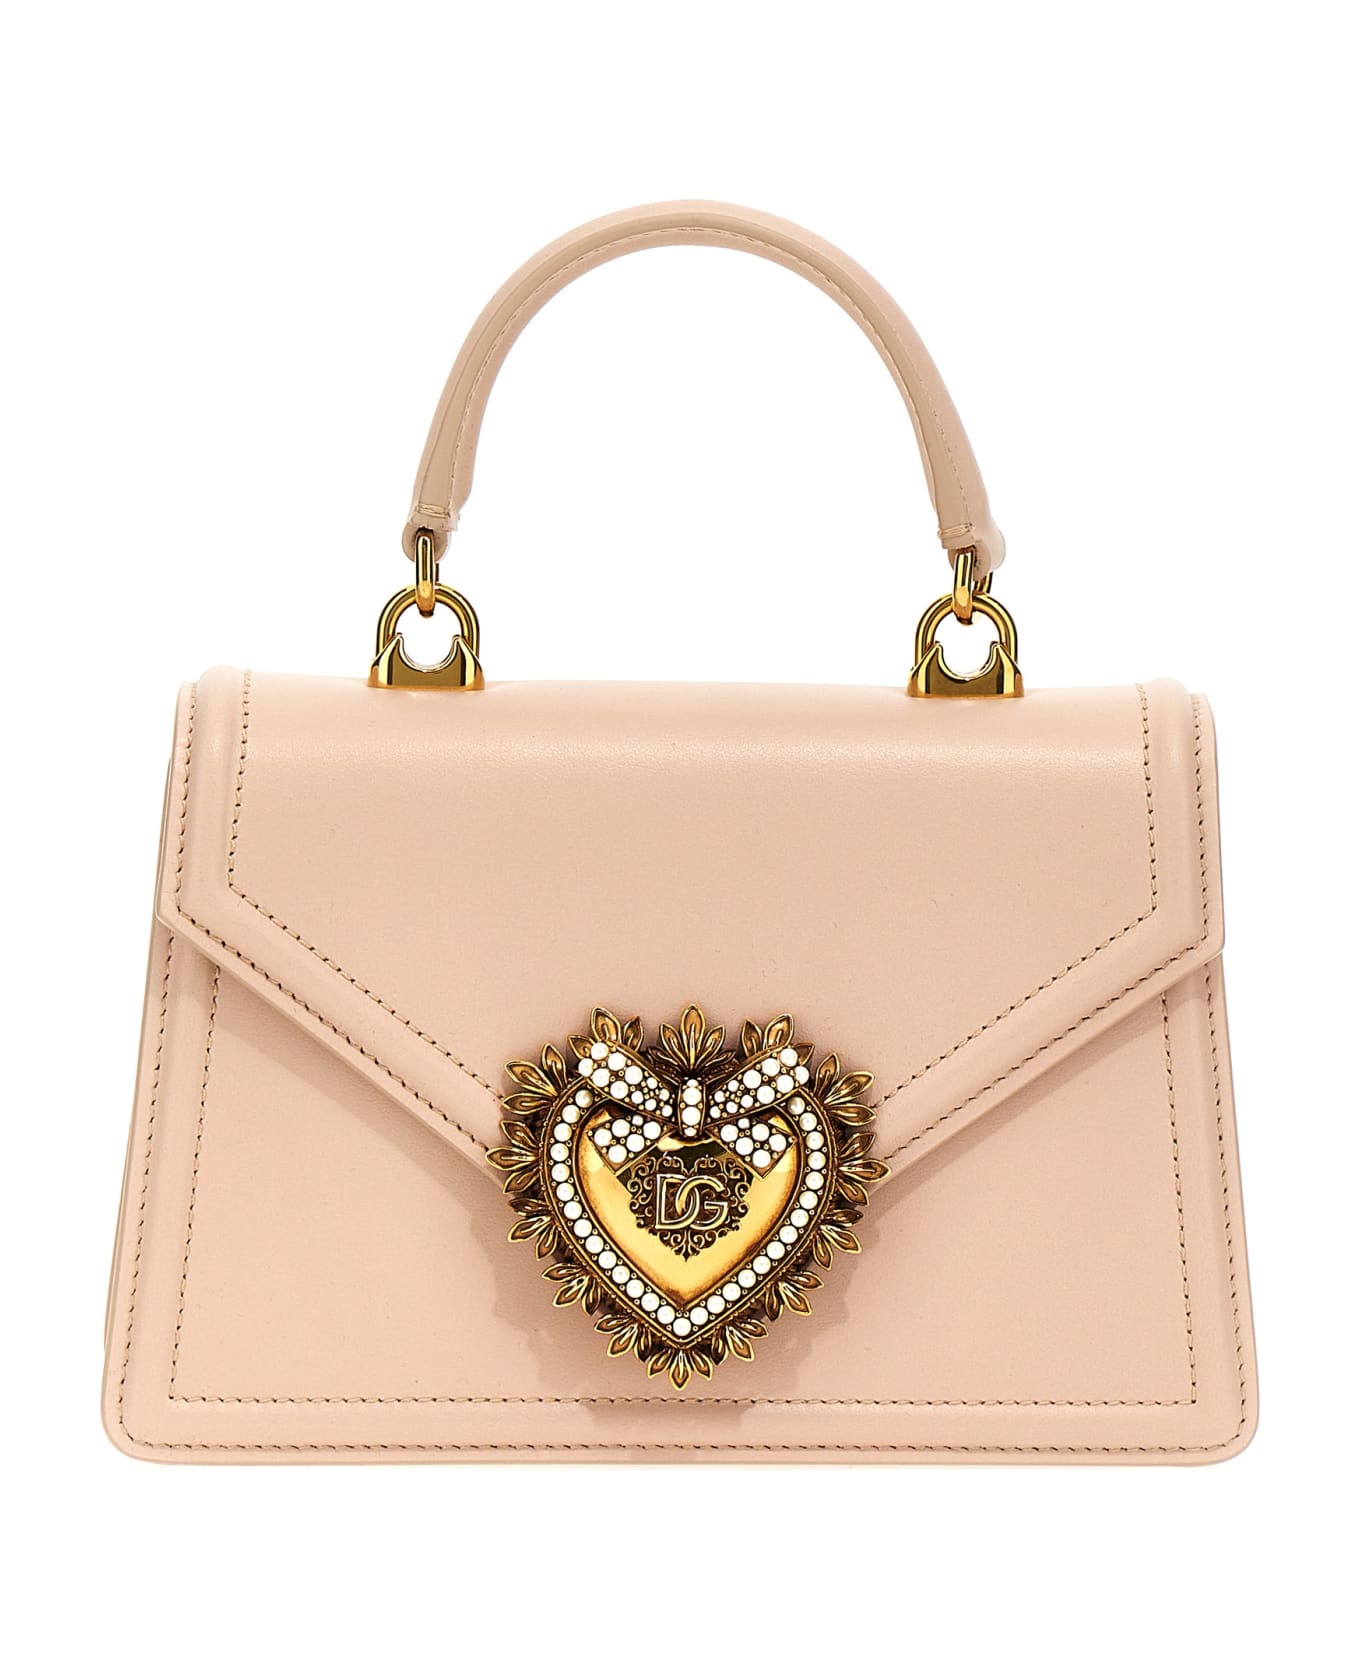 Dolce & Gabbana 'devotion' Small Handbag - Pink